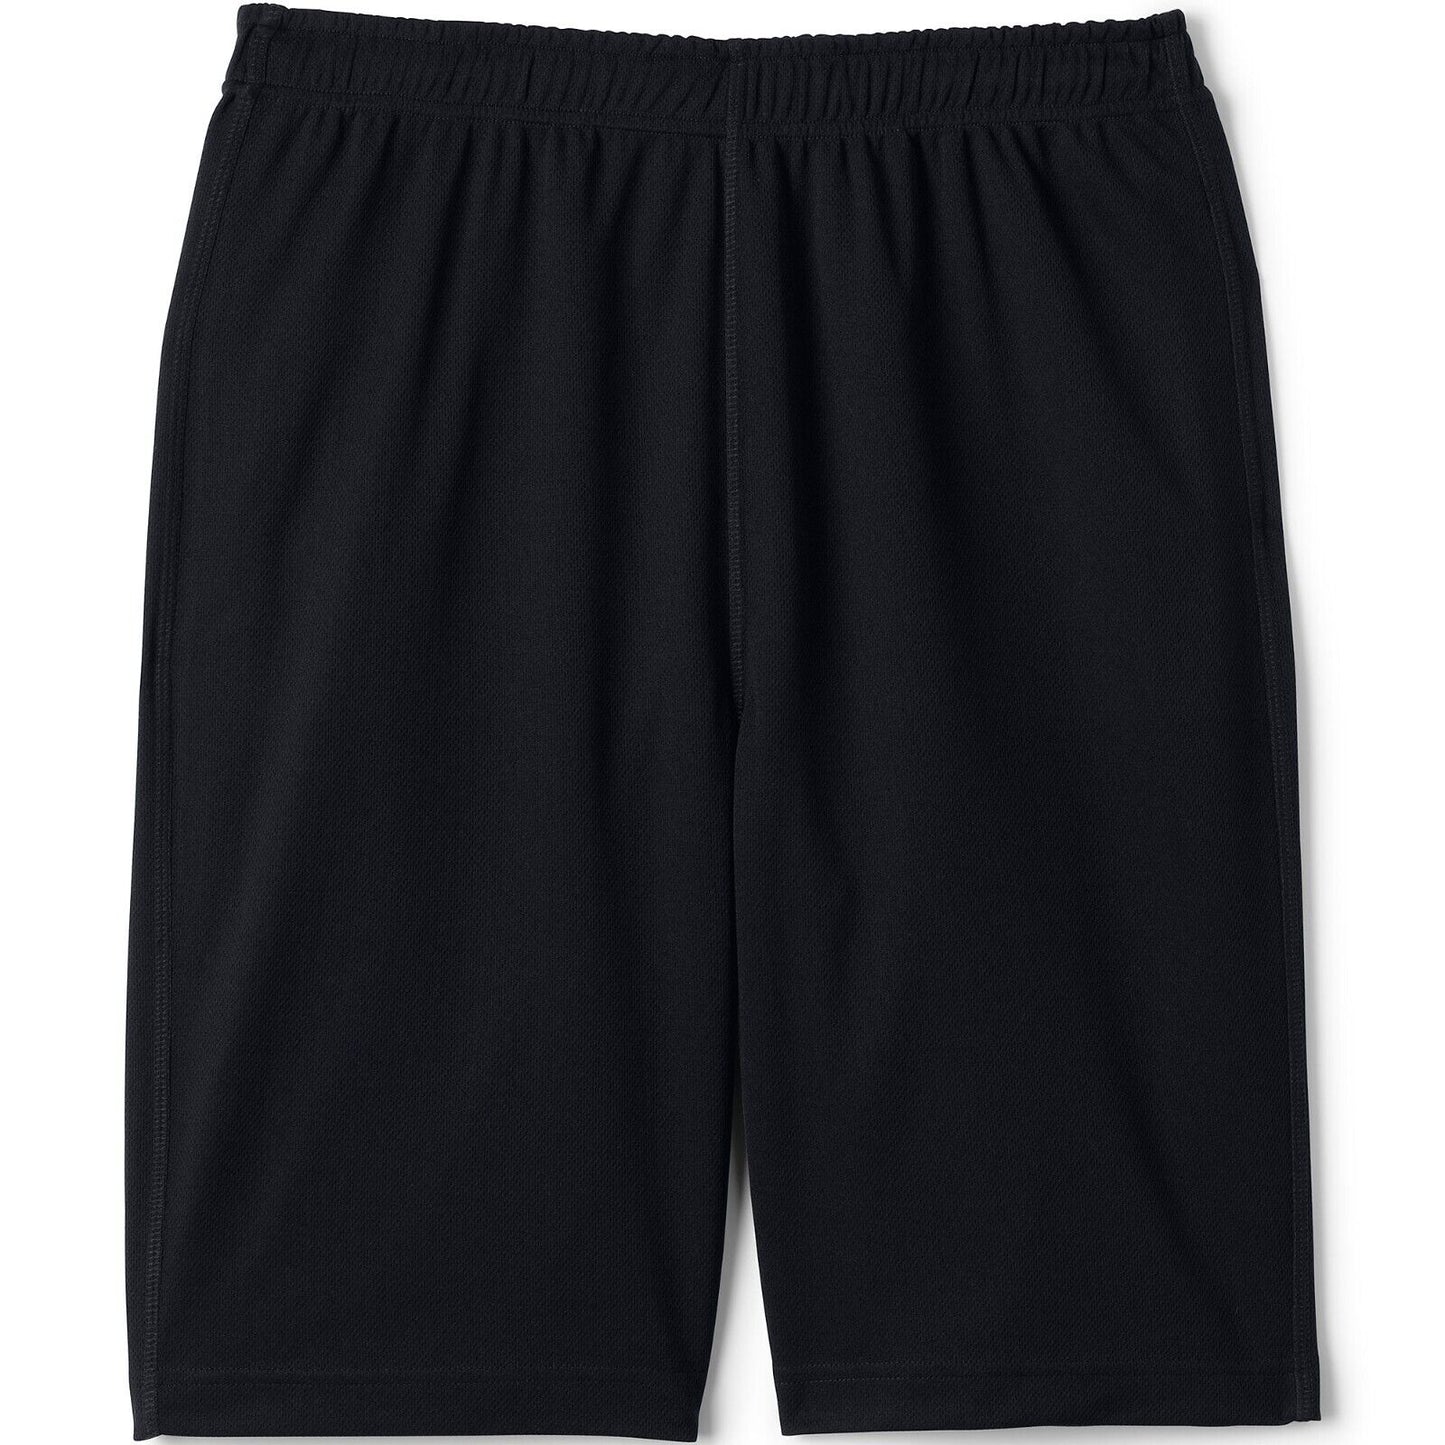 Men's Mesh Gym Shorts Size S